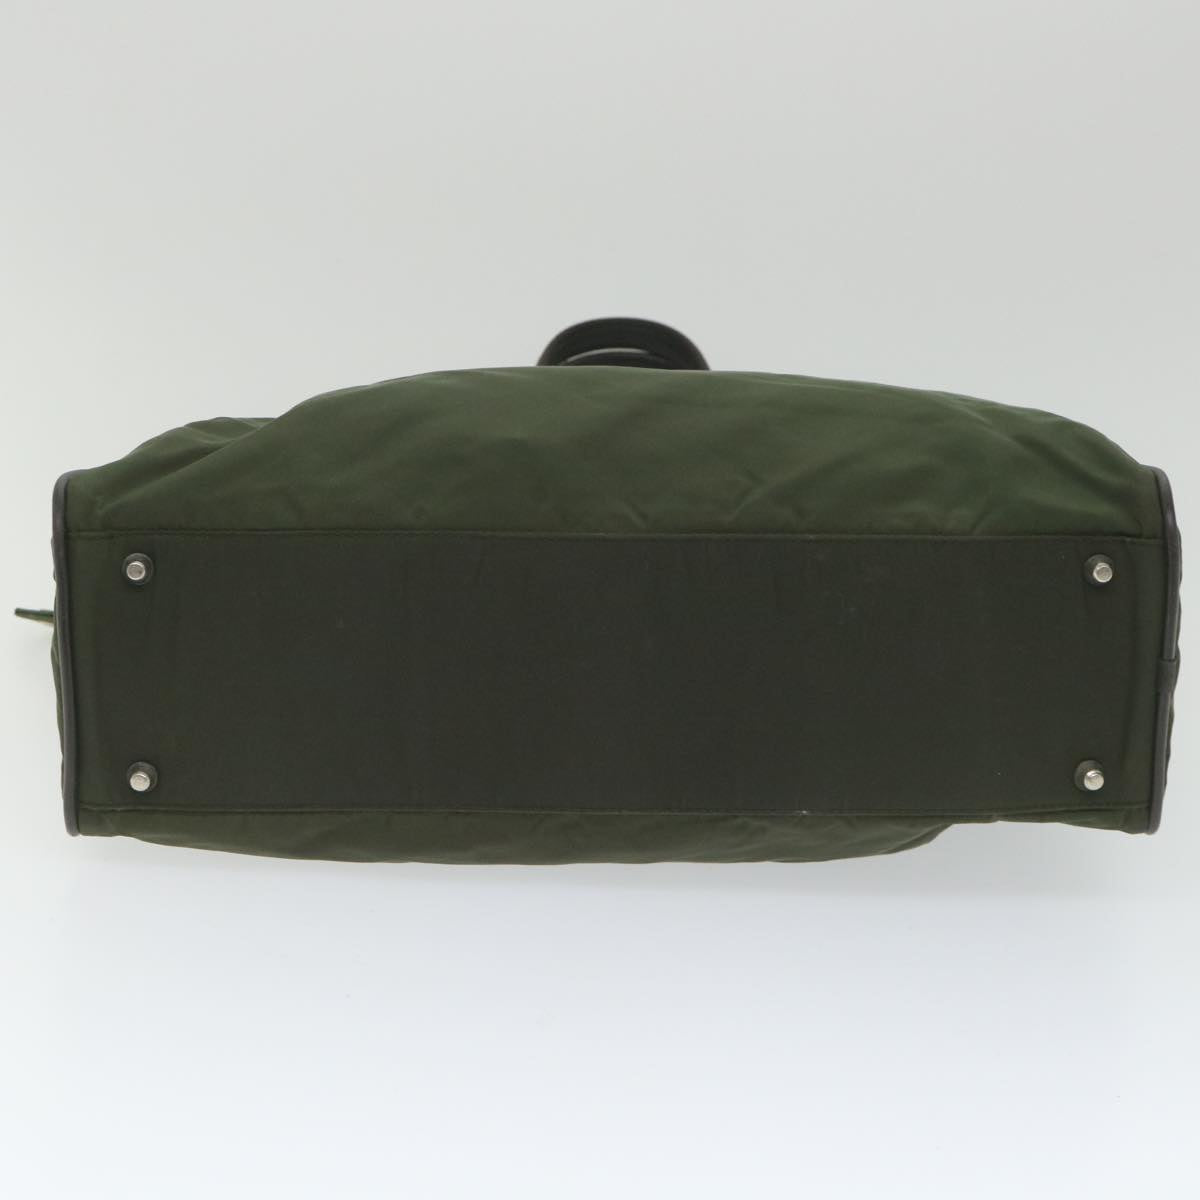 PRADA Hand Bag Nylon Green Auth yb414